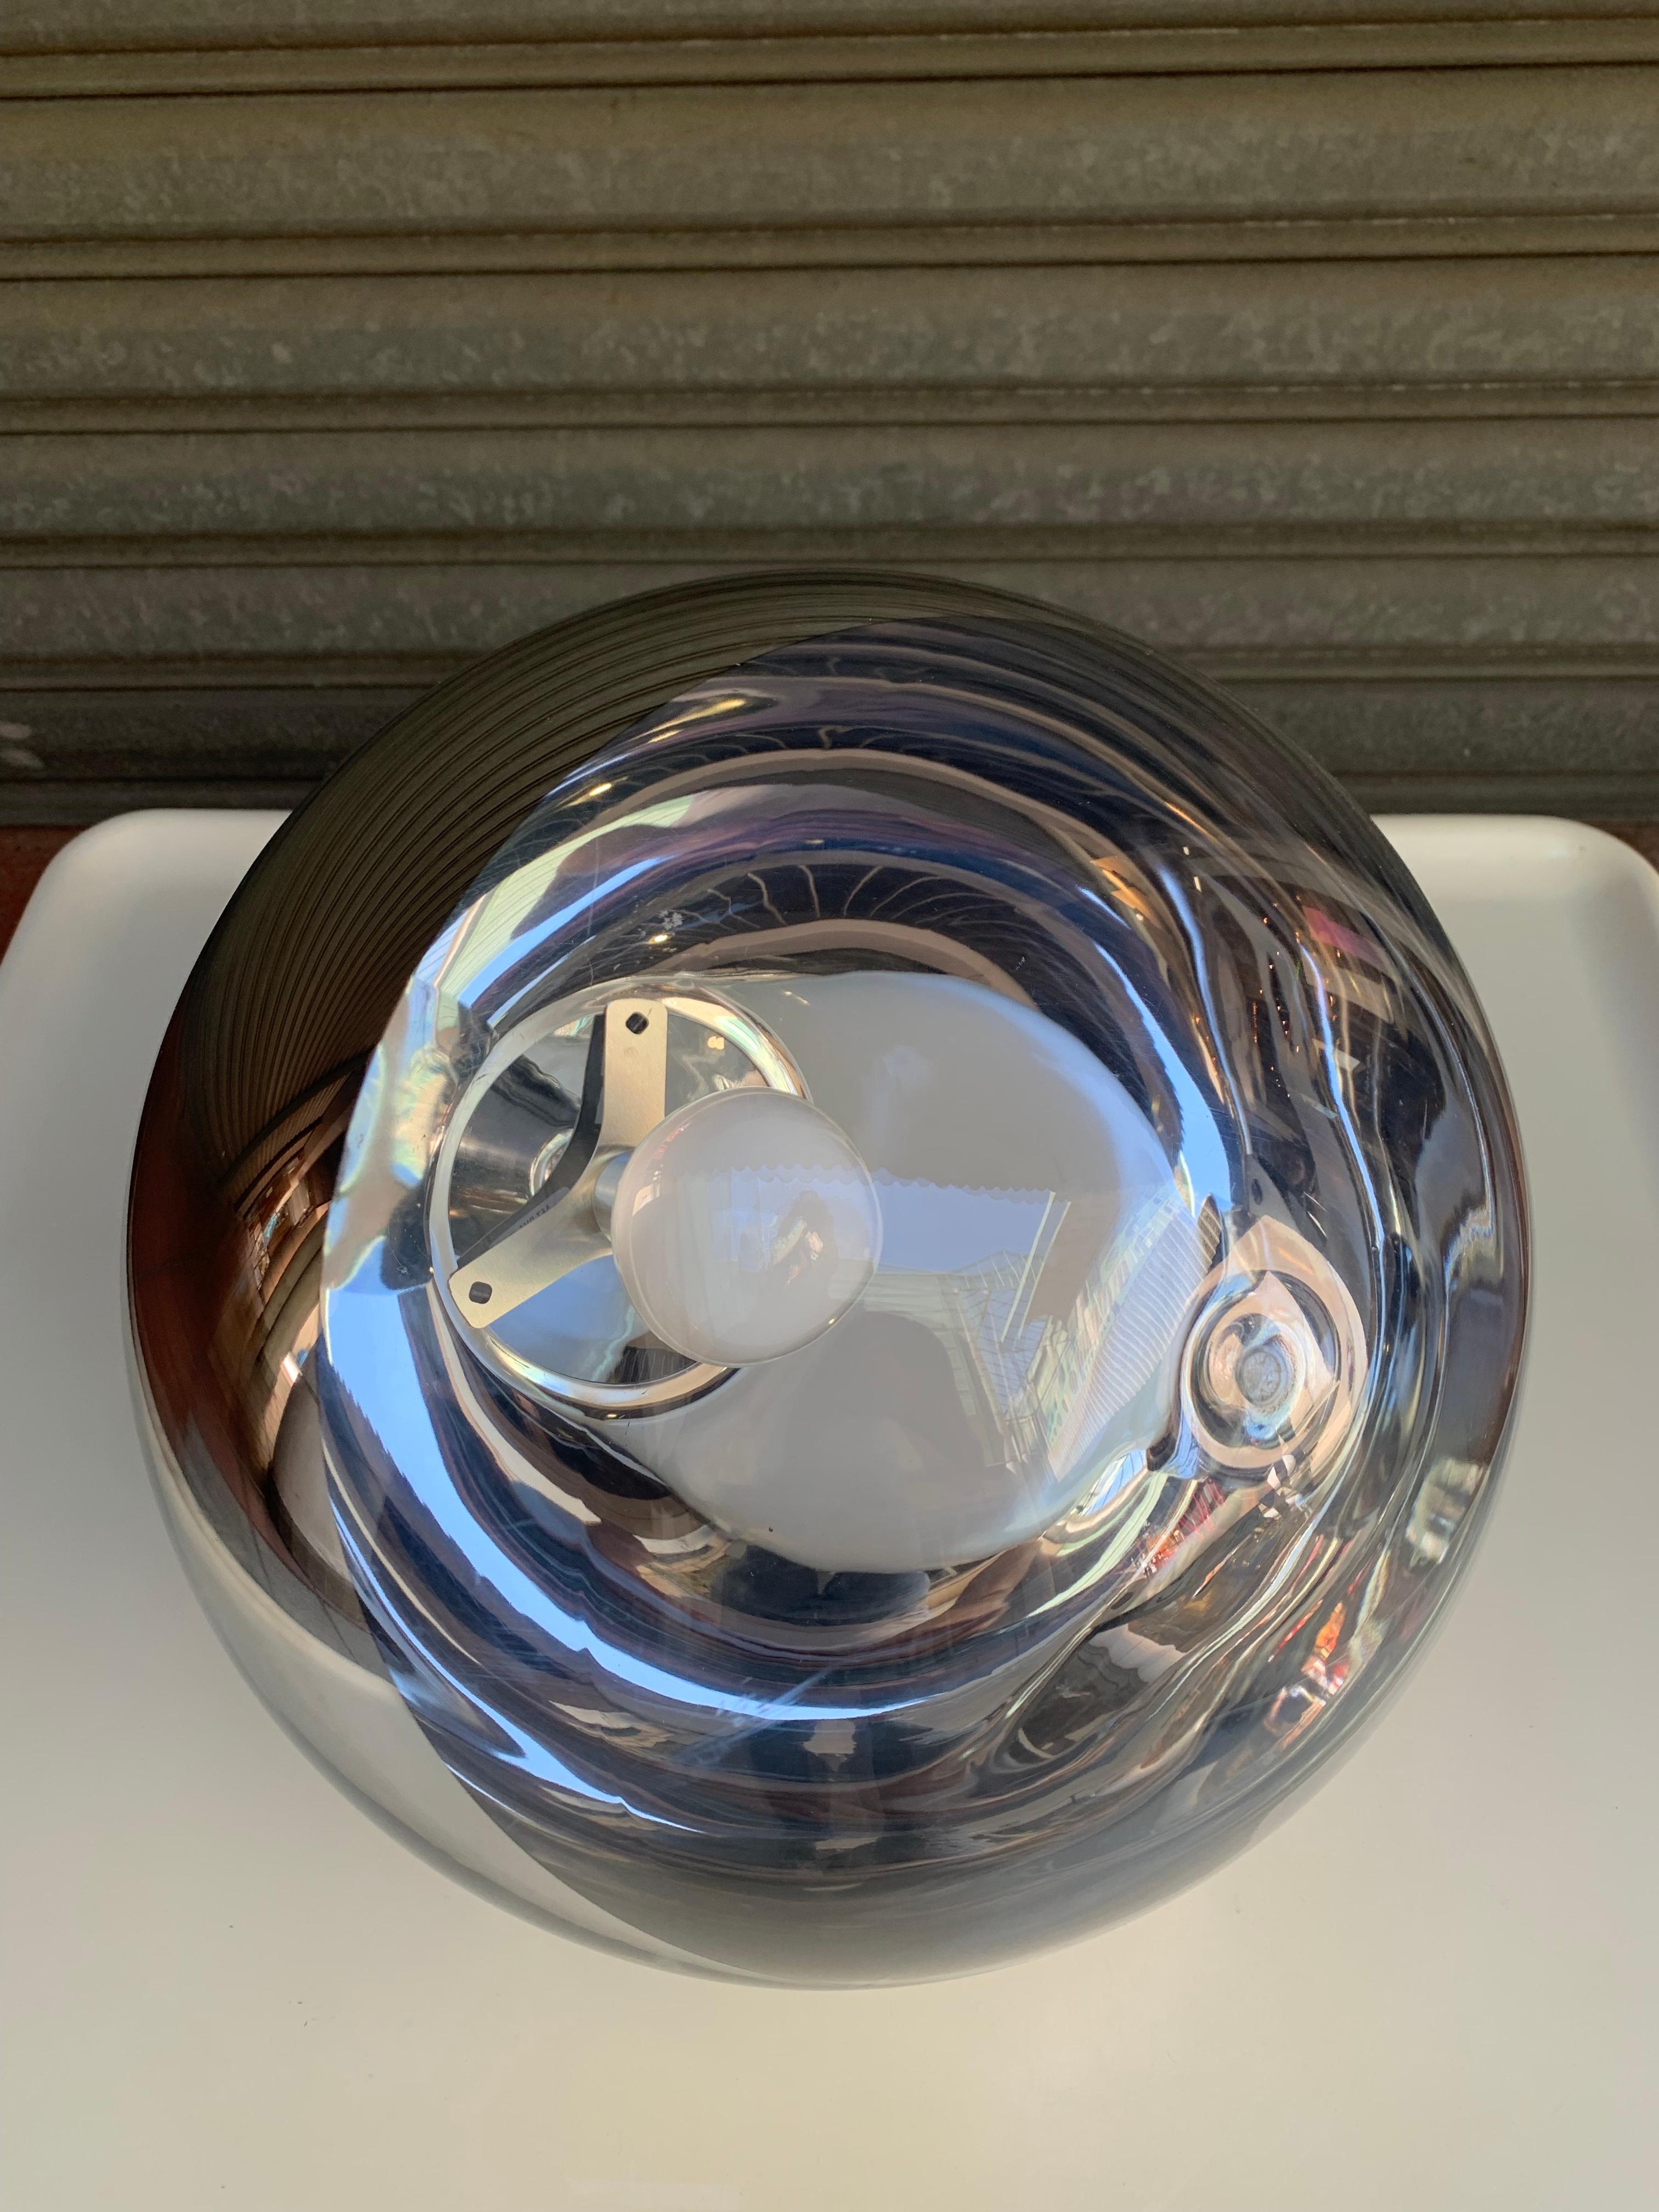 Tom dixon
Lamp / Suspension known as Mirror Ball
Circa 1985
Polycarbonate
Dimensions: D37.5 cm.